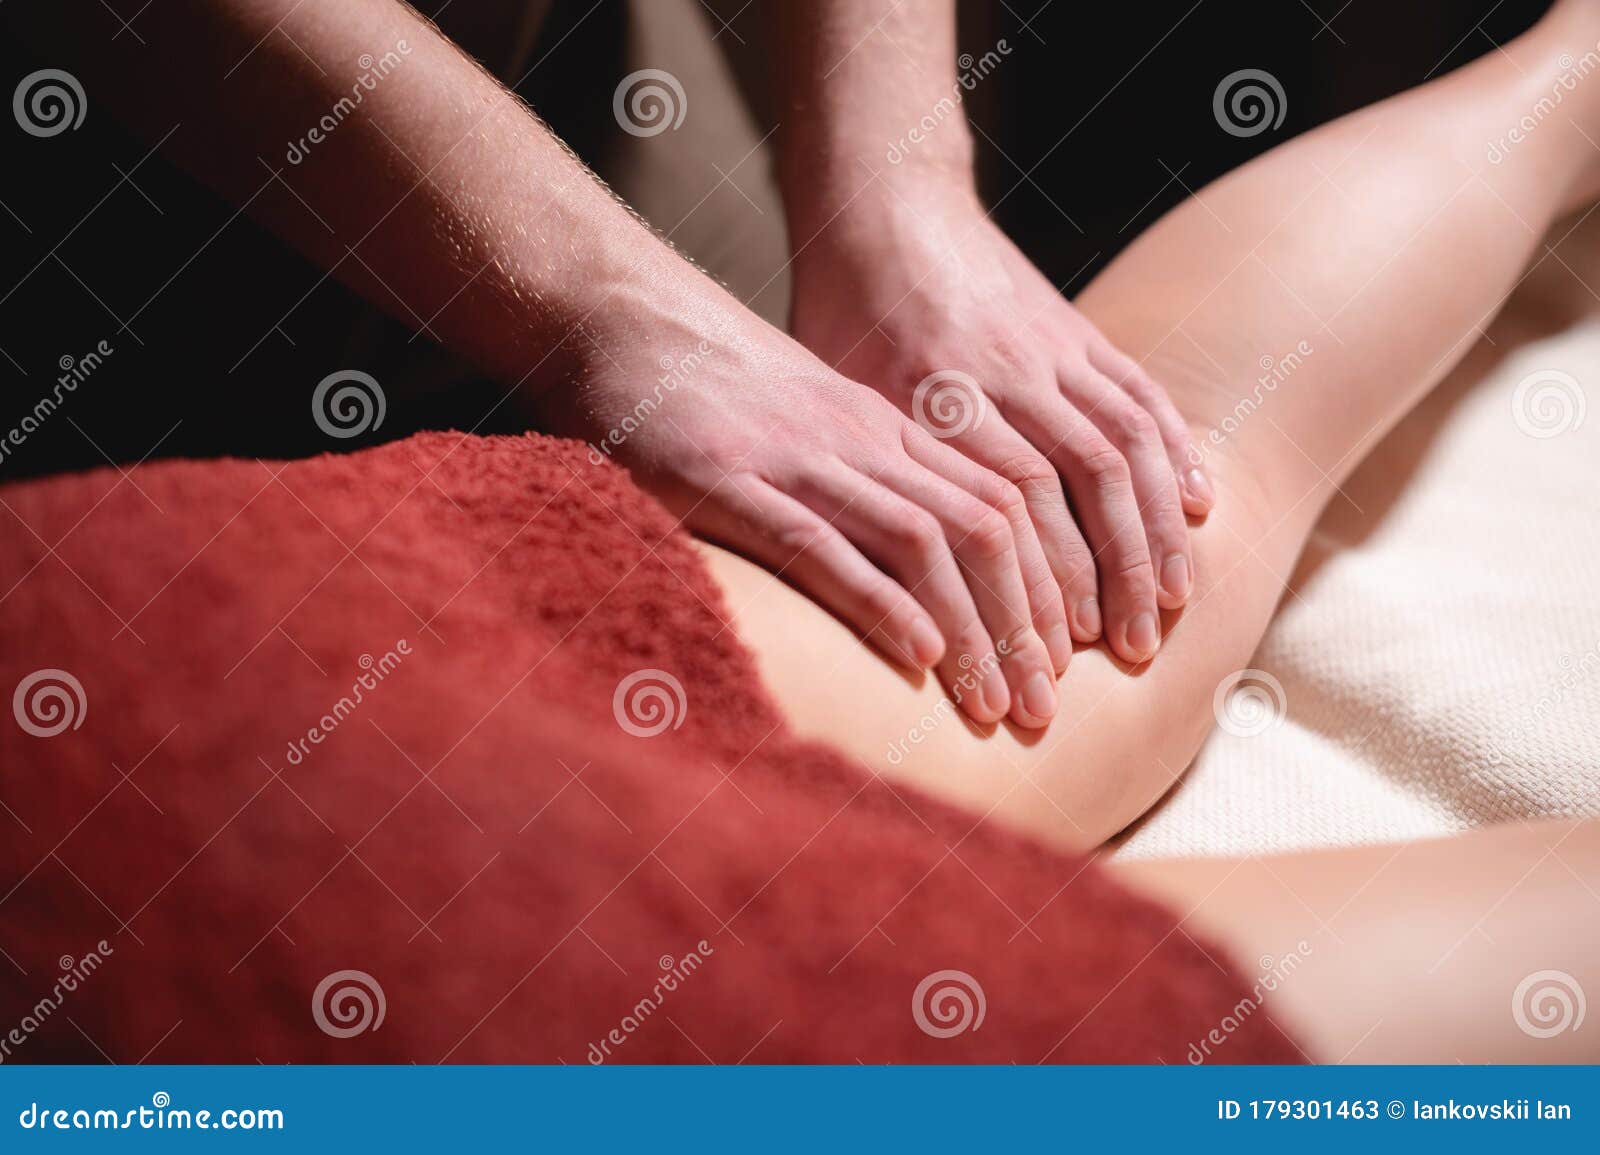 https://thumbs.dreamstime.com/z/close-up-low-key-woman-s-thigh-massage-professional-premium-spa-salon-man-masseur-does-dark-room-close-up-low-key-179301463.jpg